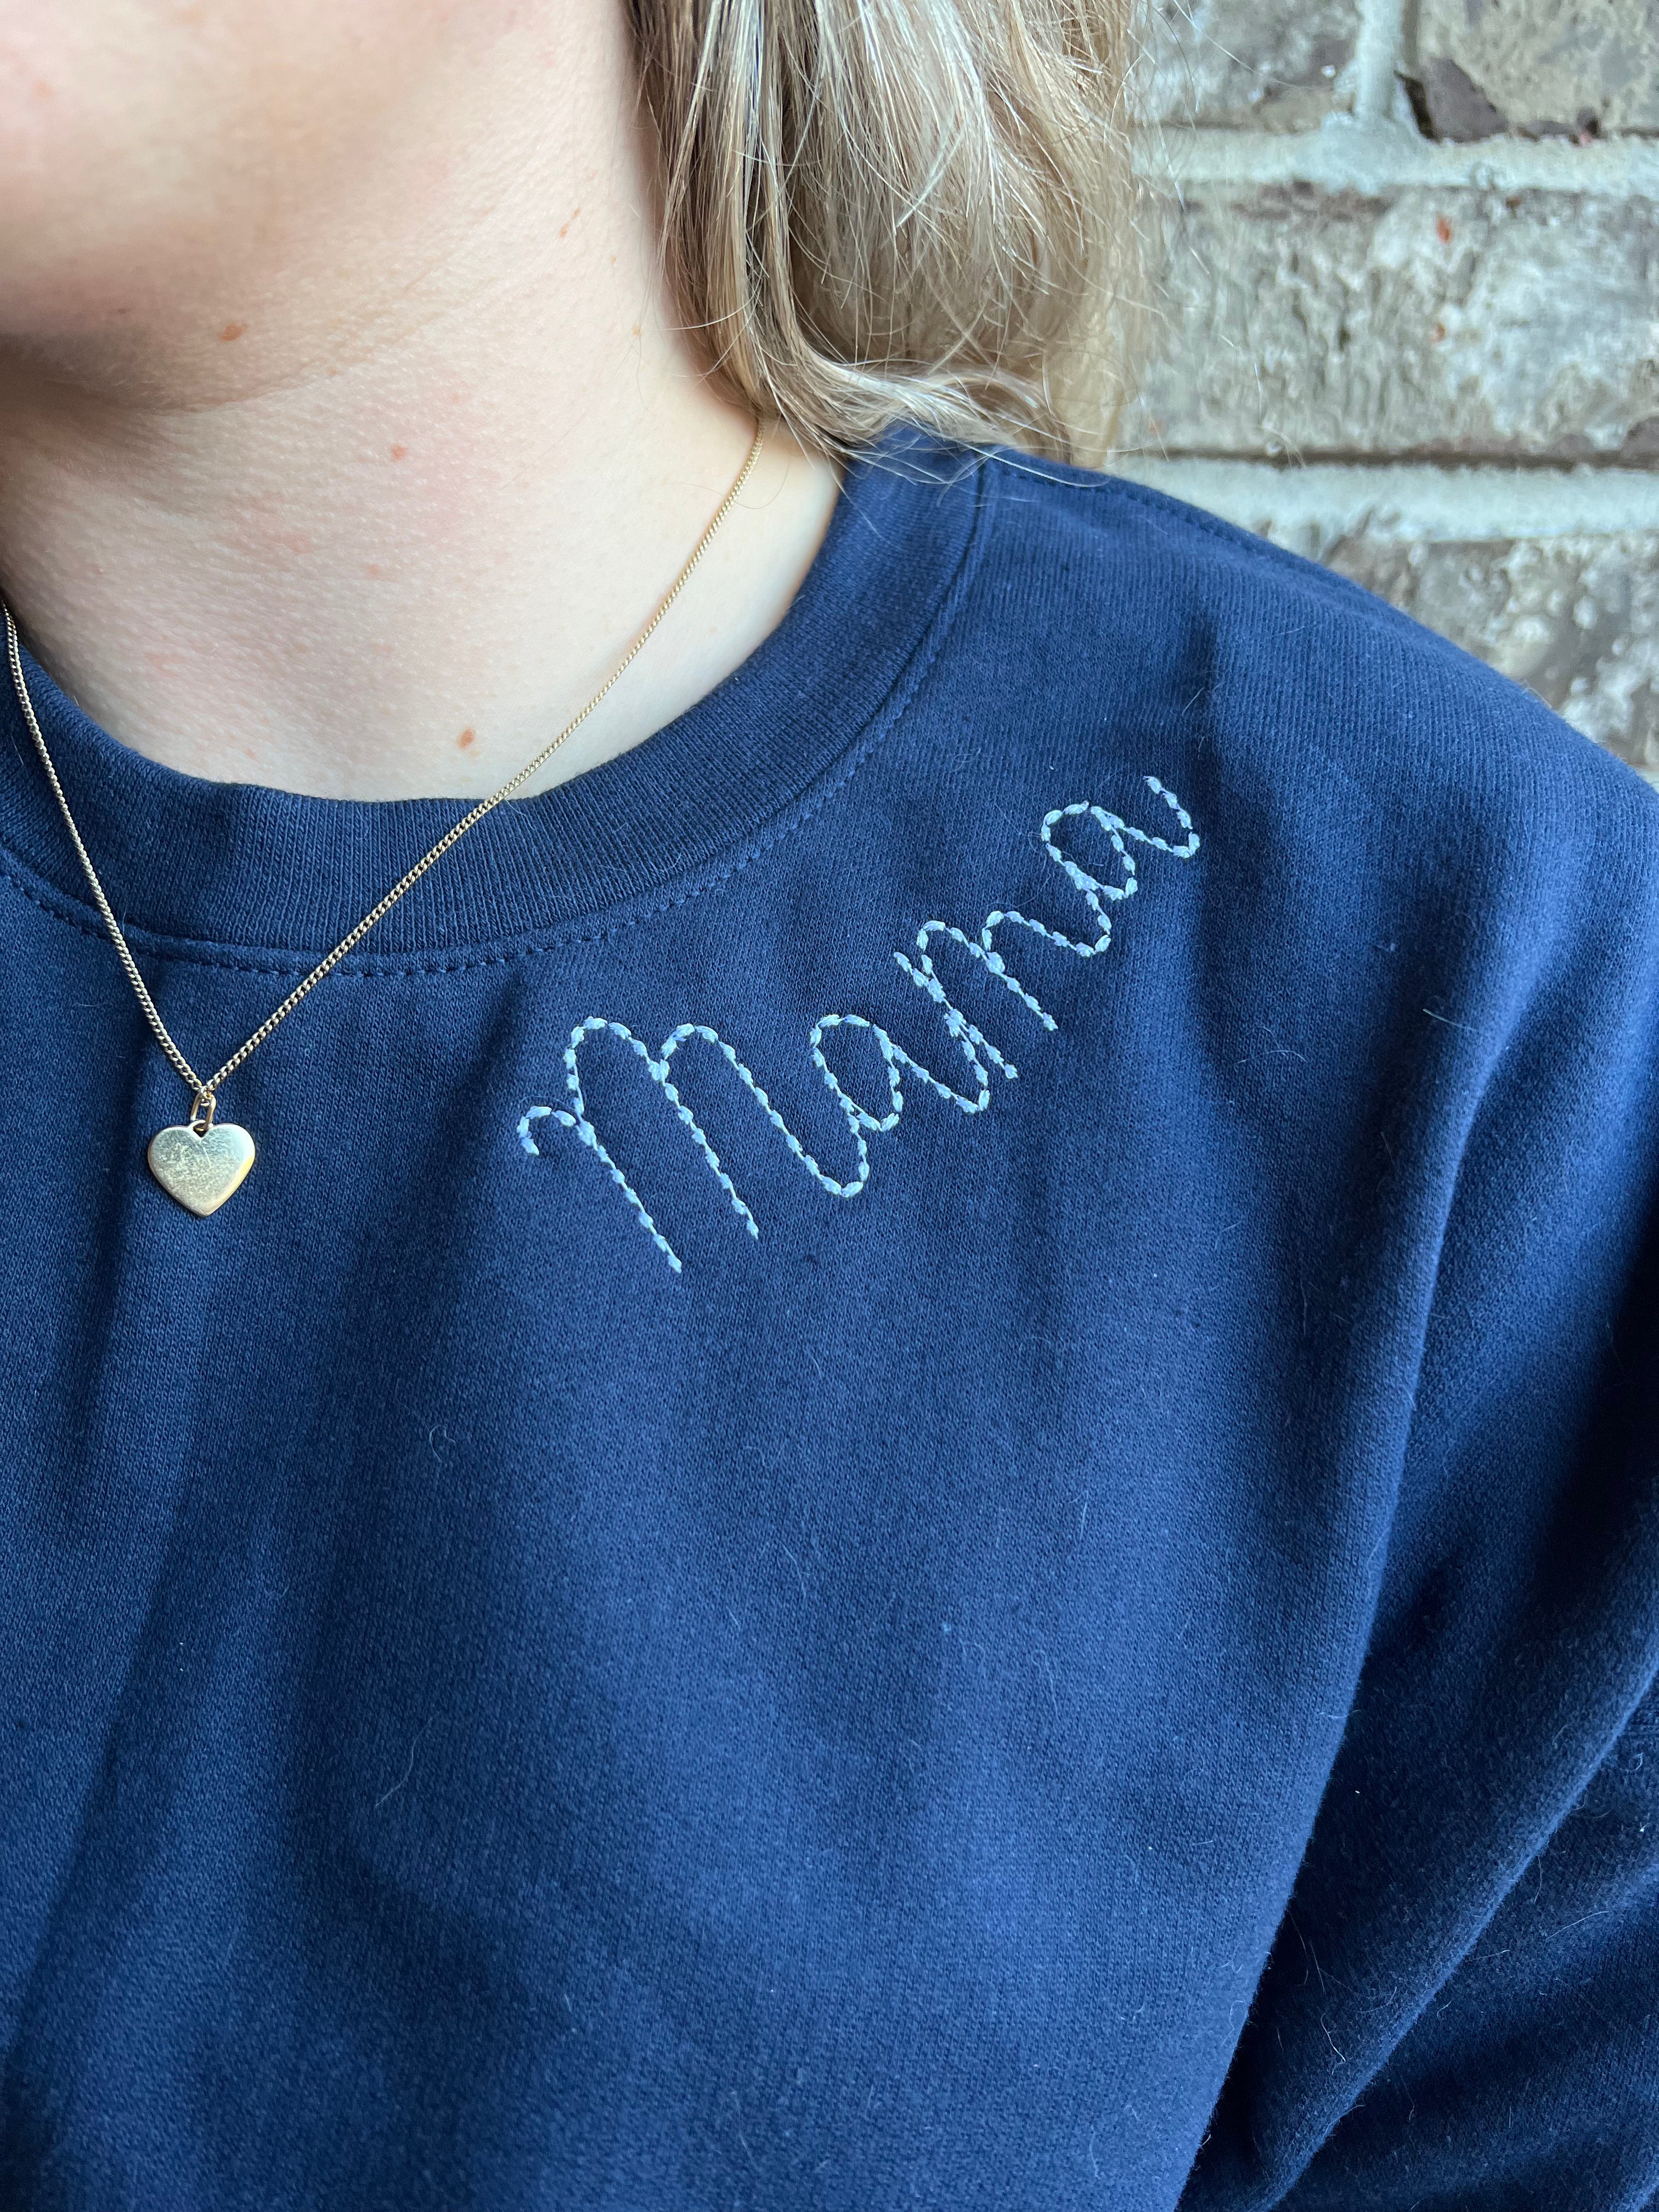 Custom Embroidered Handstitch Font “mama” on the neckline Sweatshirts